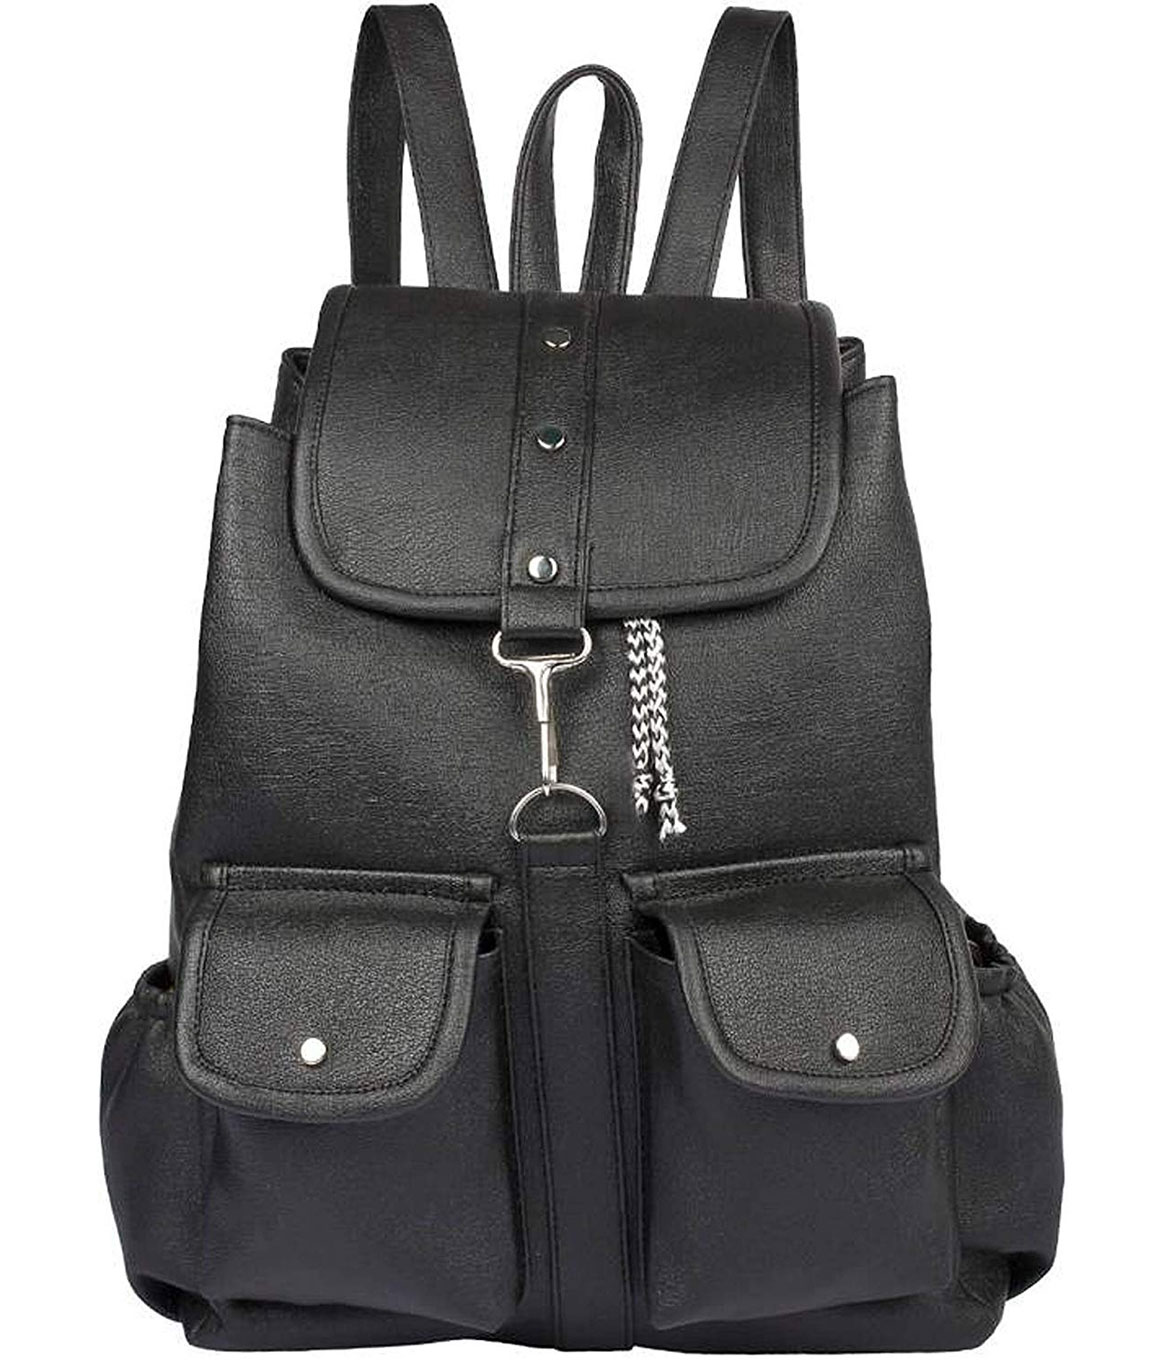 Cute stylish women's & girls backpack waterproof bag. - Women - 1715126319